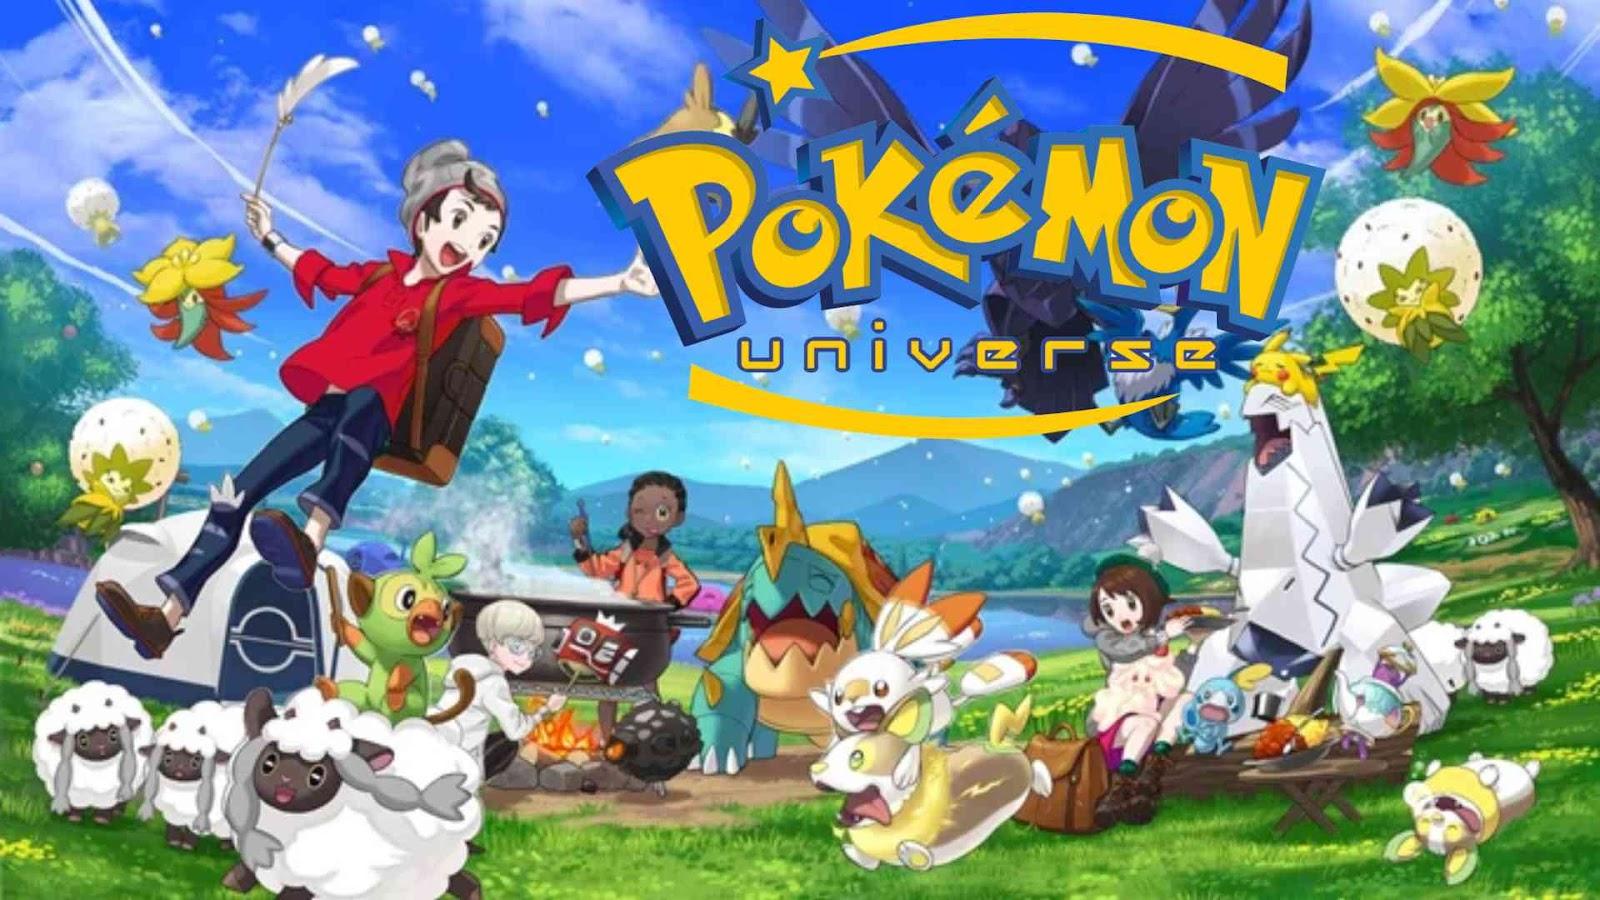 Pokémon Universe